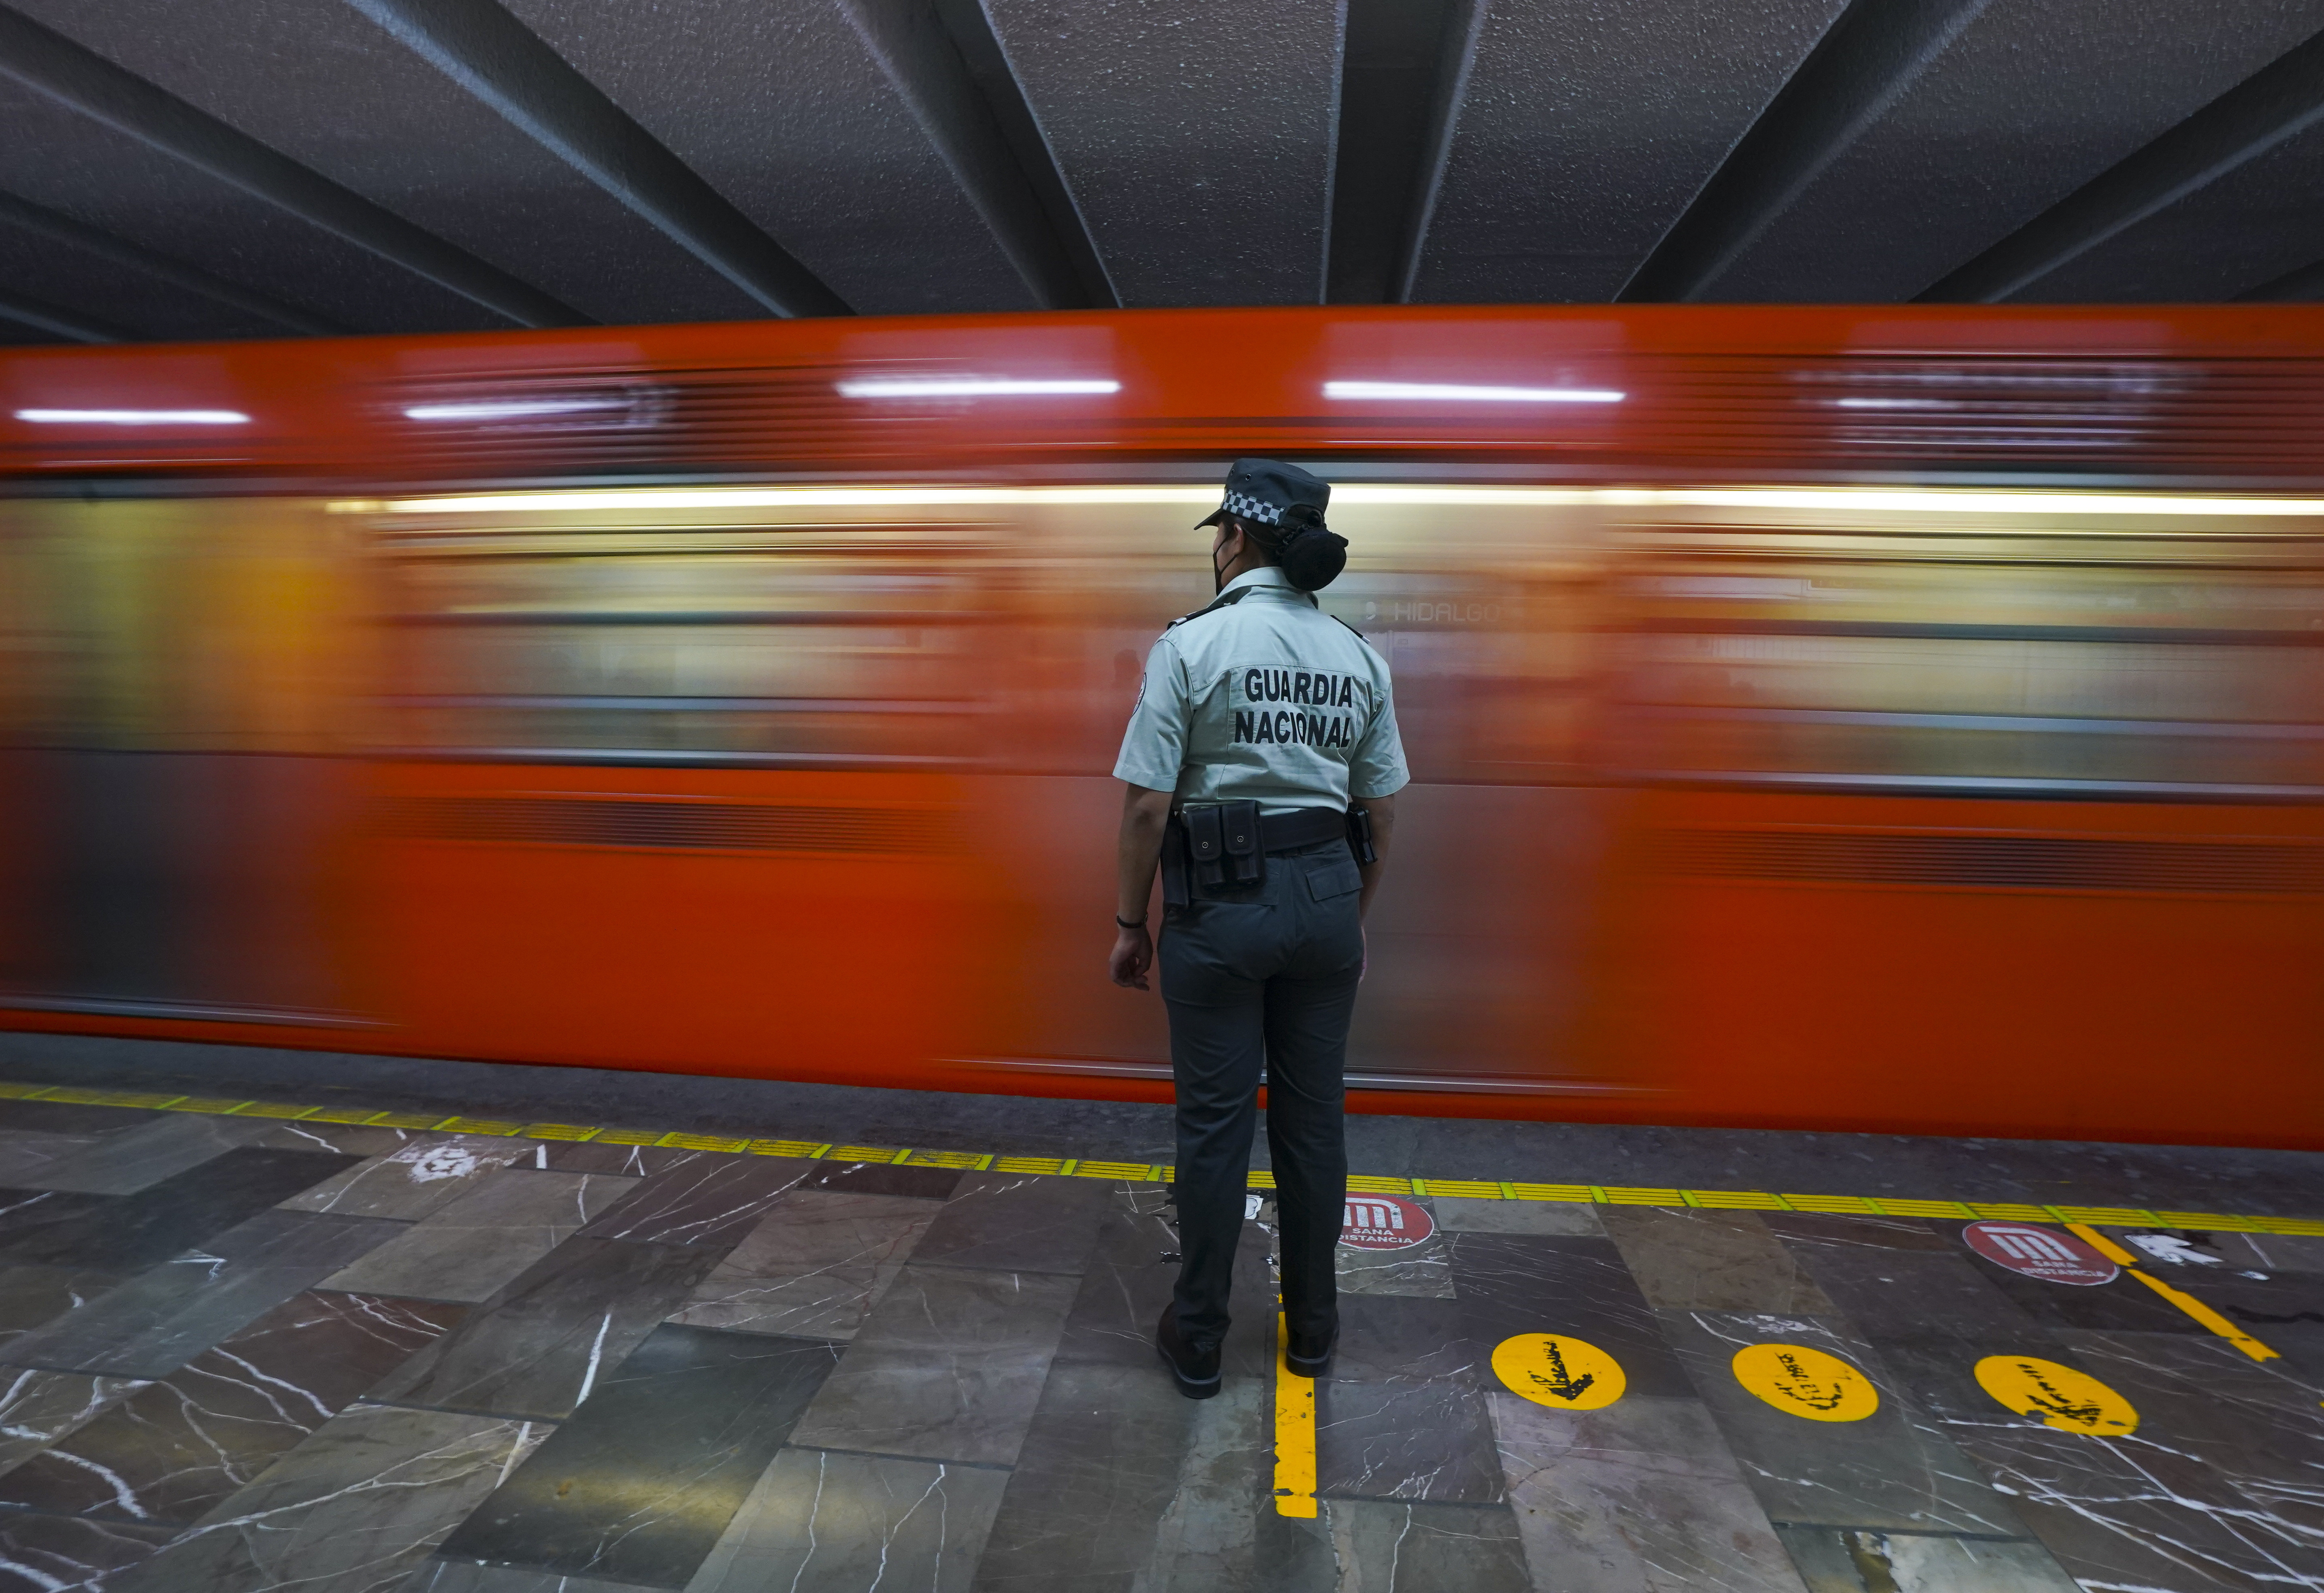 Since January 12, the National Guard has been monitoring the Metro (AP Photo/Fernando Llano)